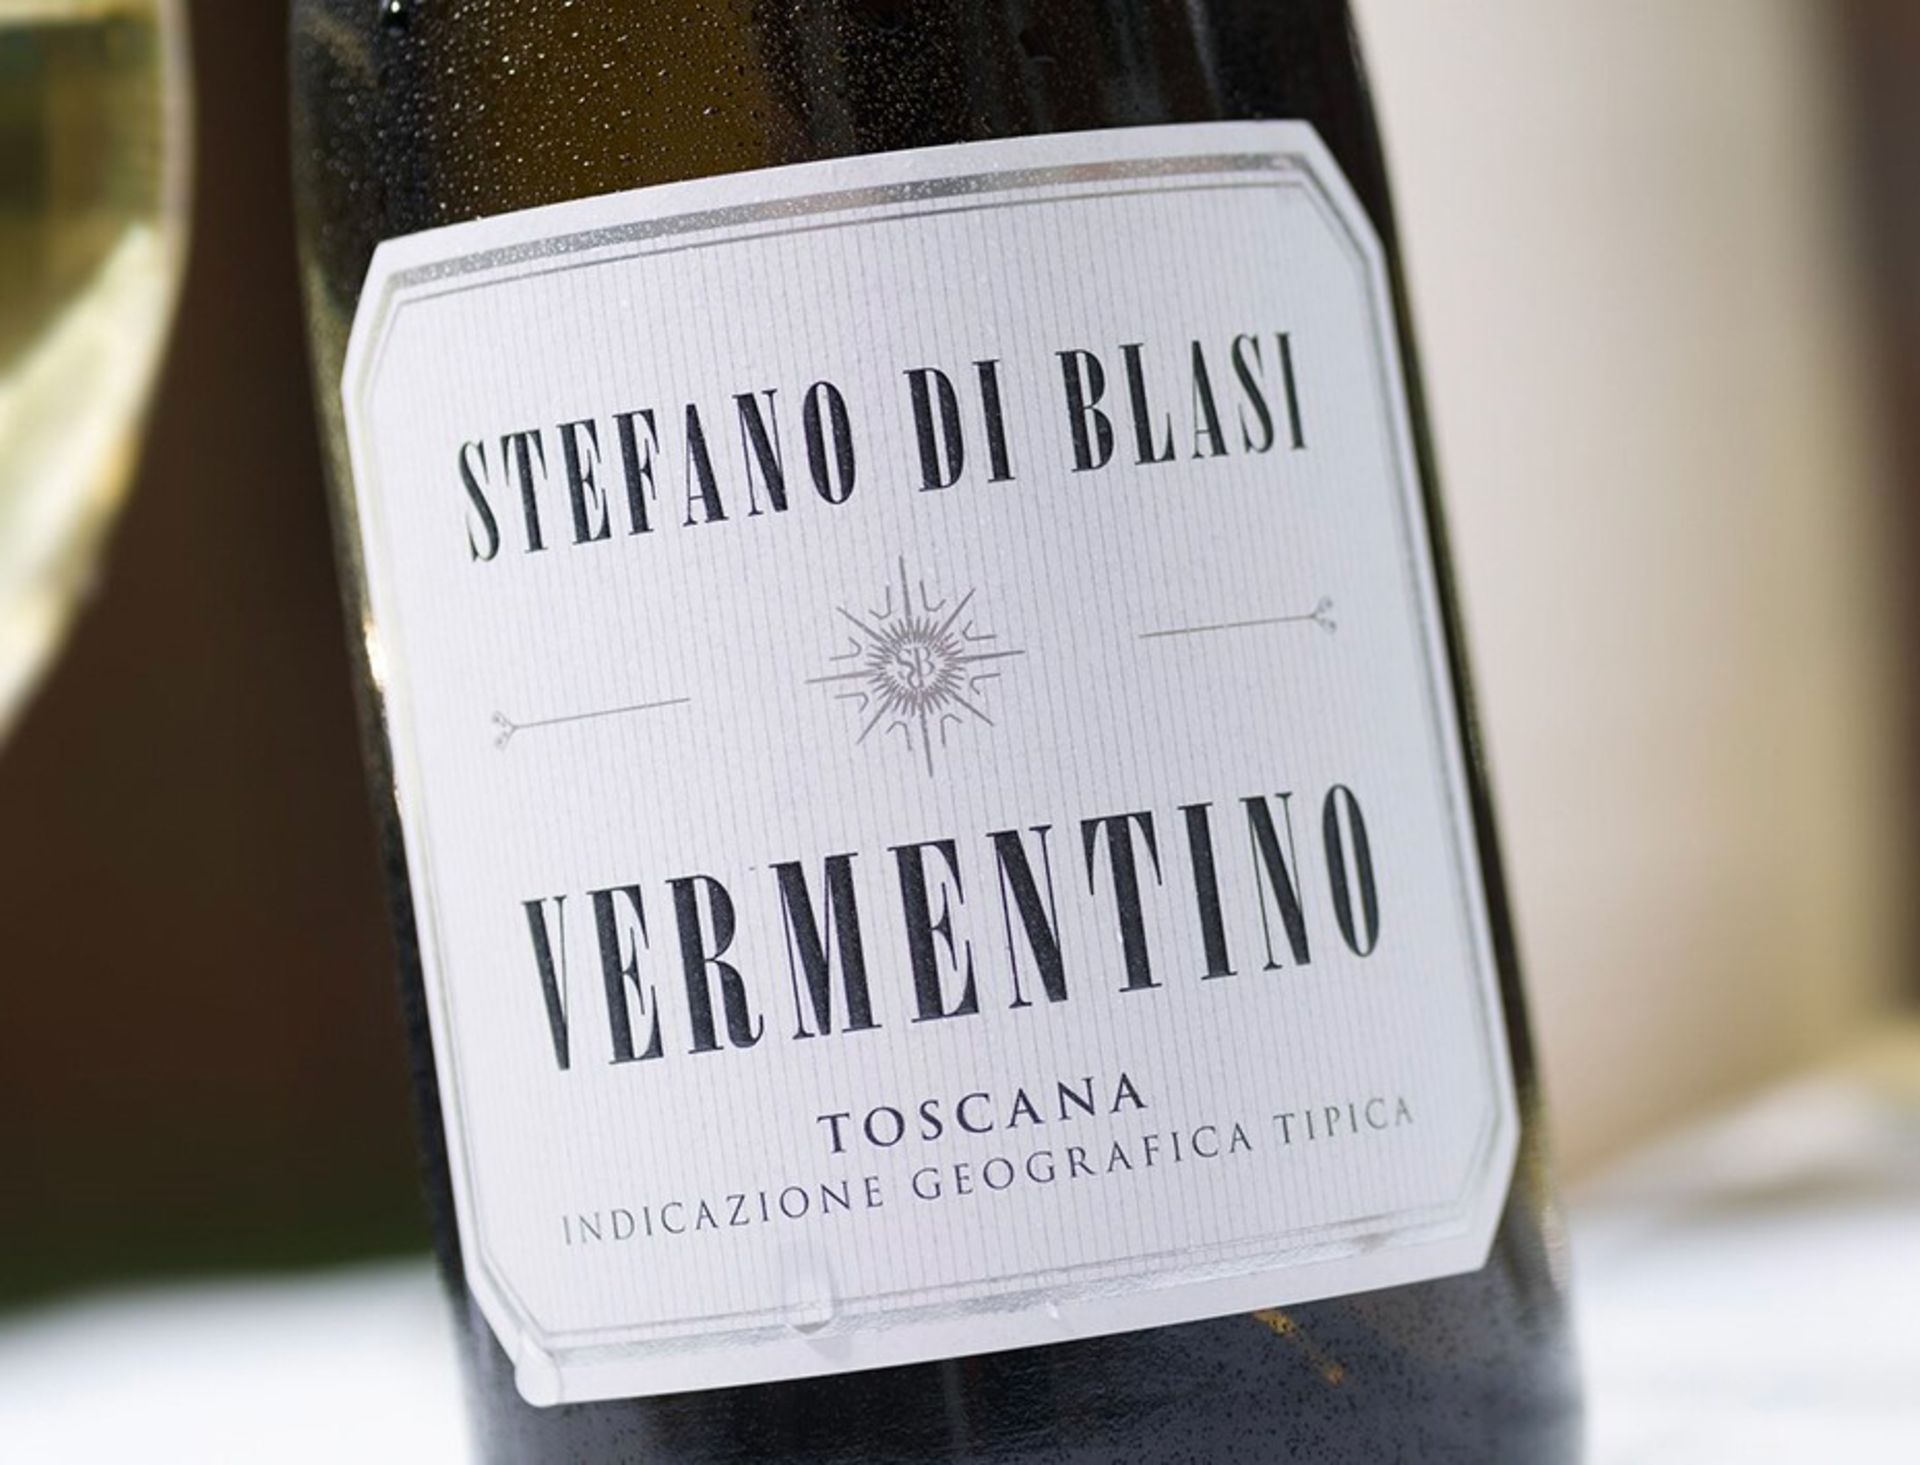 12 x Bottles of Stefano Di Blasi 2019 Vermentino Toscana 13.5% Wine - 750ml Bottles - Drink Until - Image 4 of 8